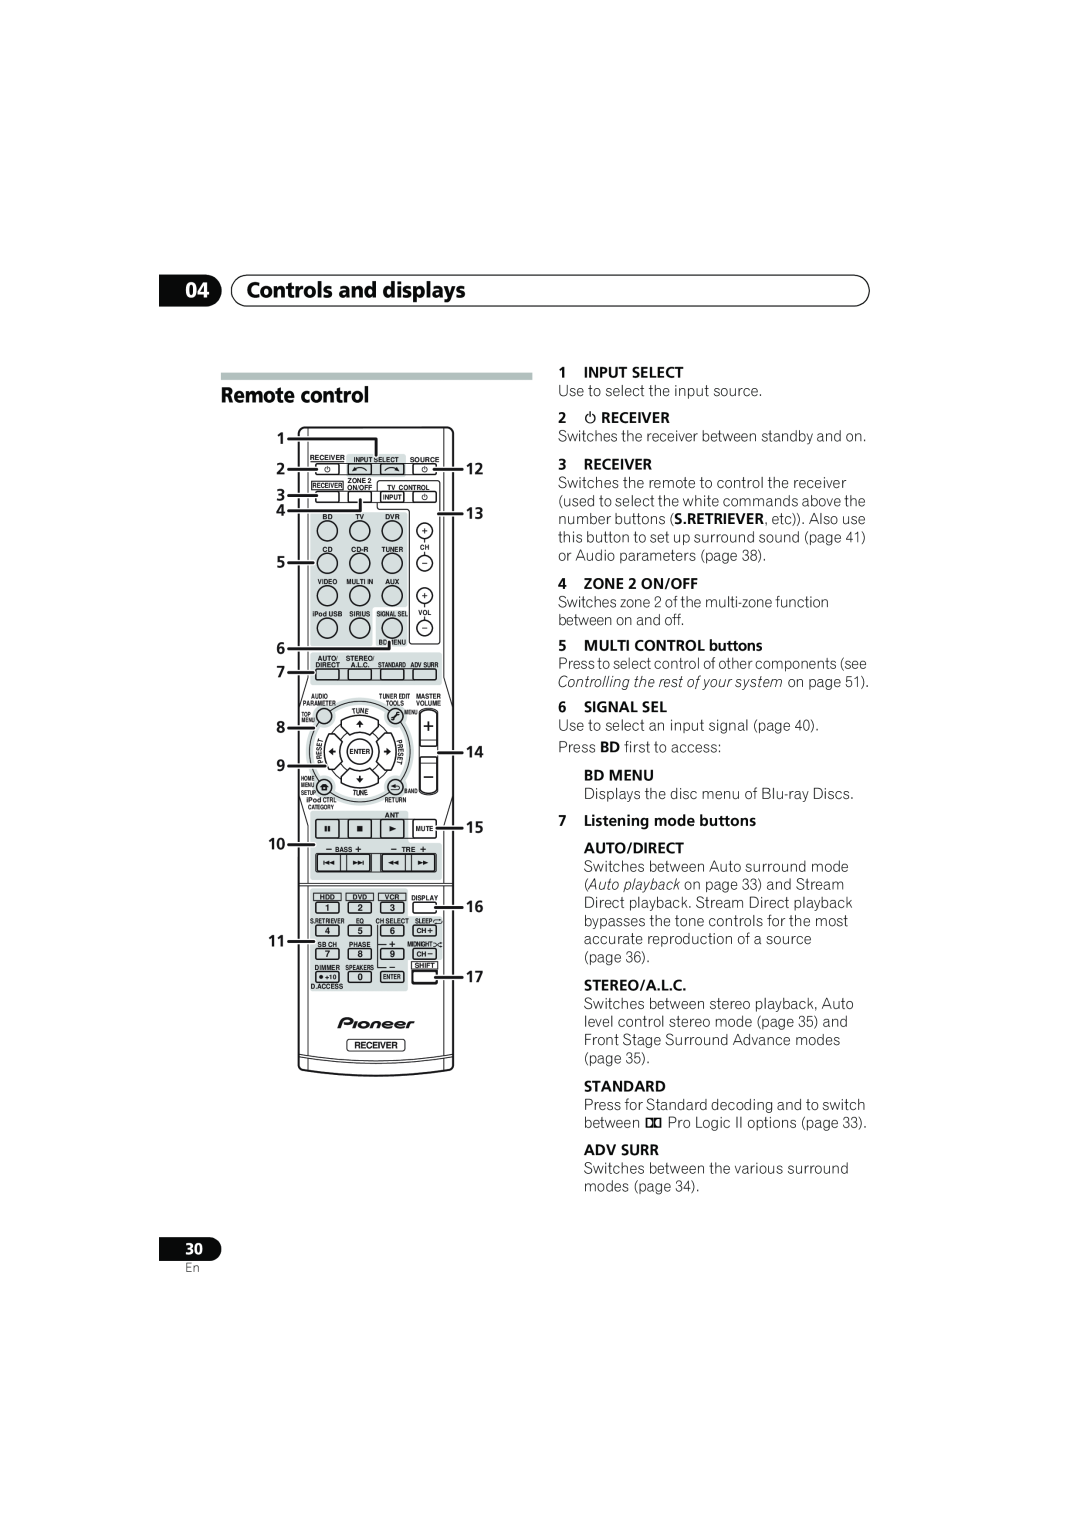 Pioneer VSX-819H-K manual 04Controls and displays Remote control 